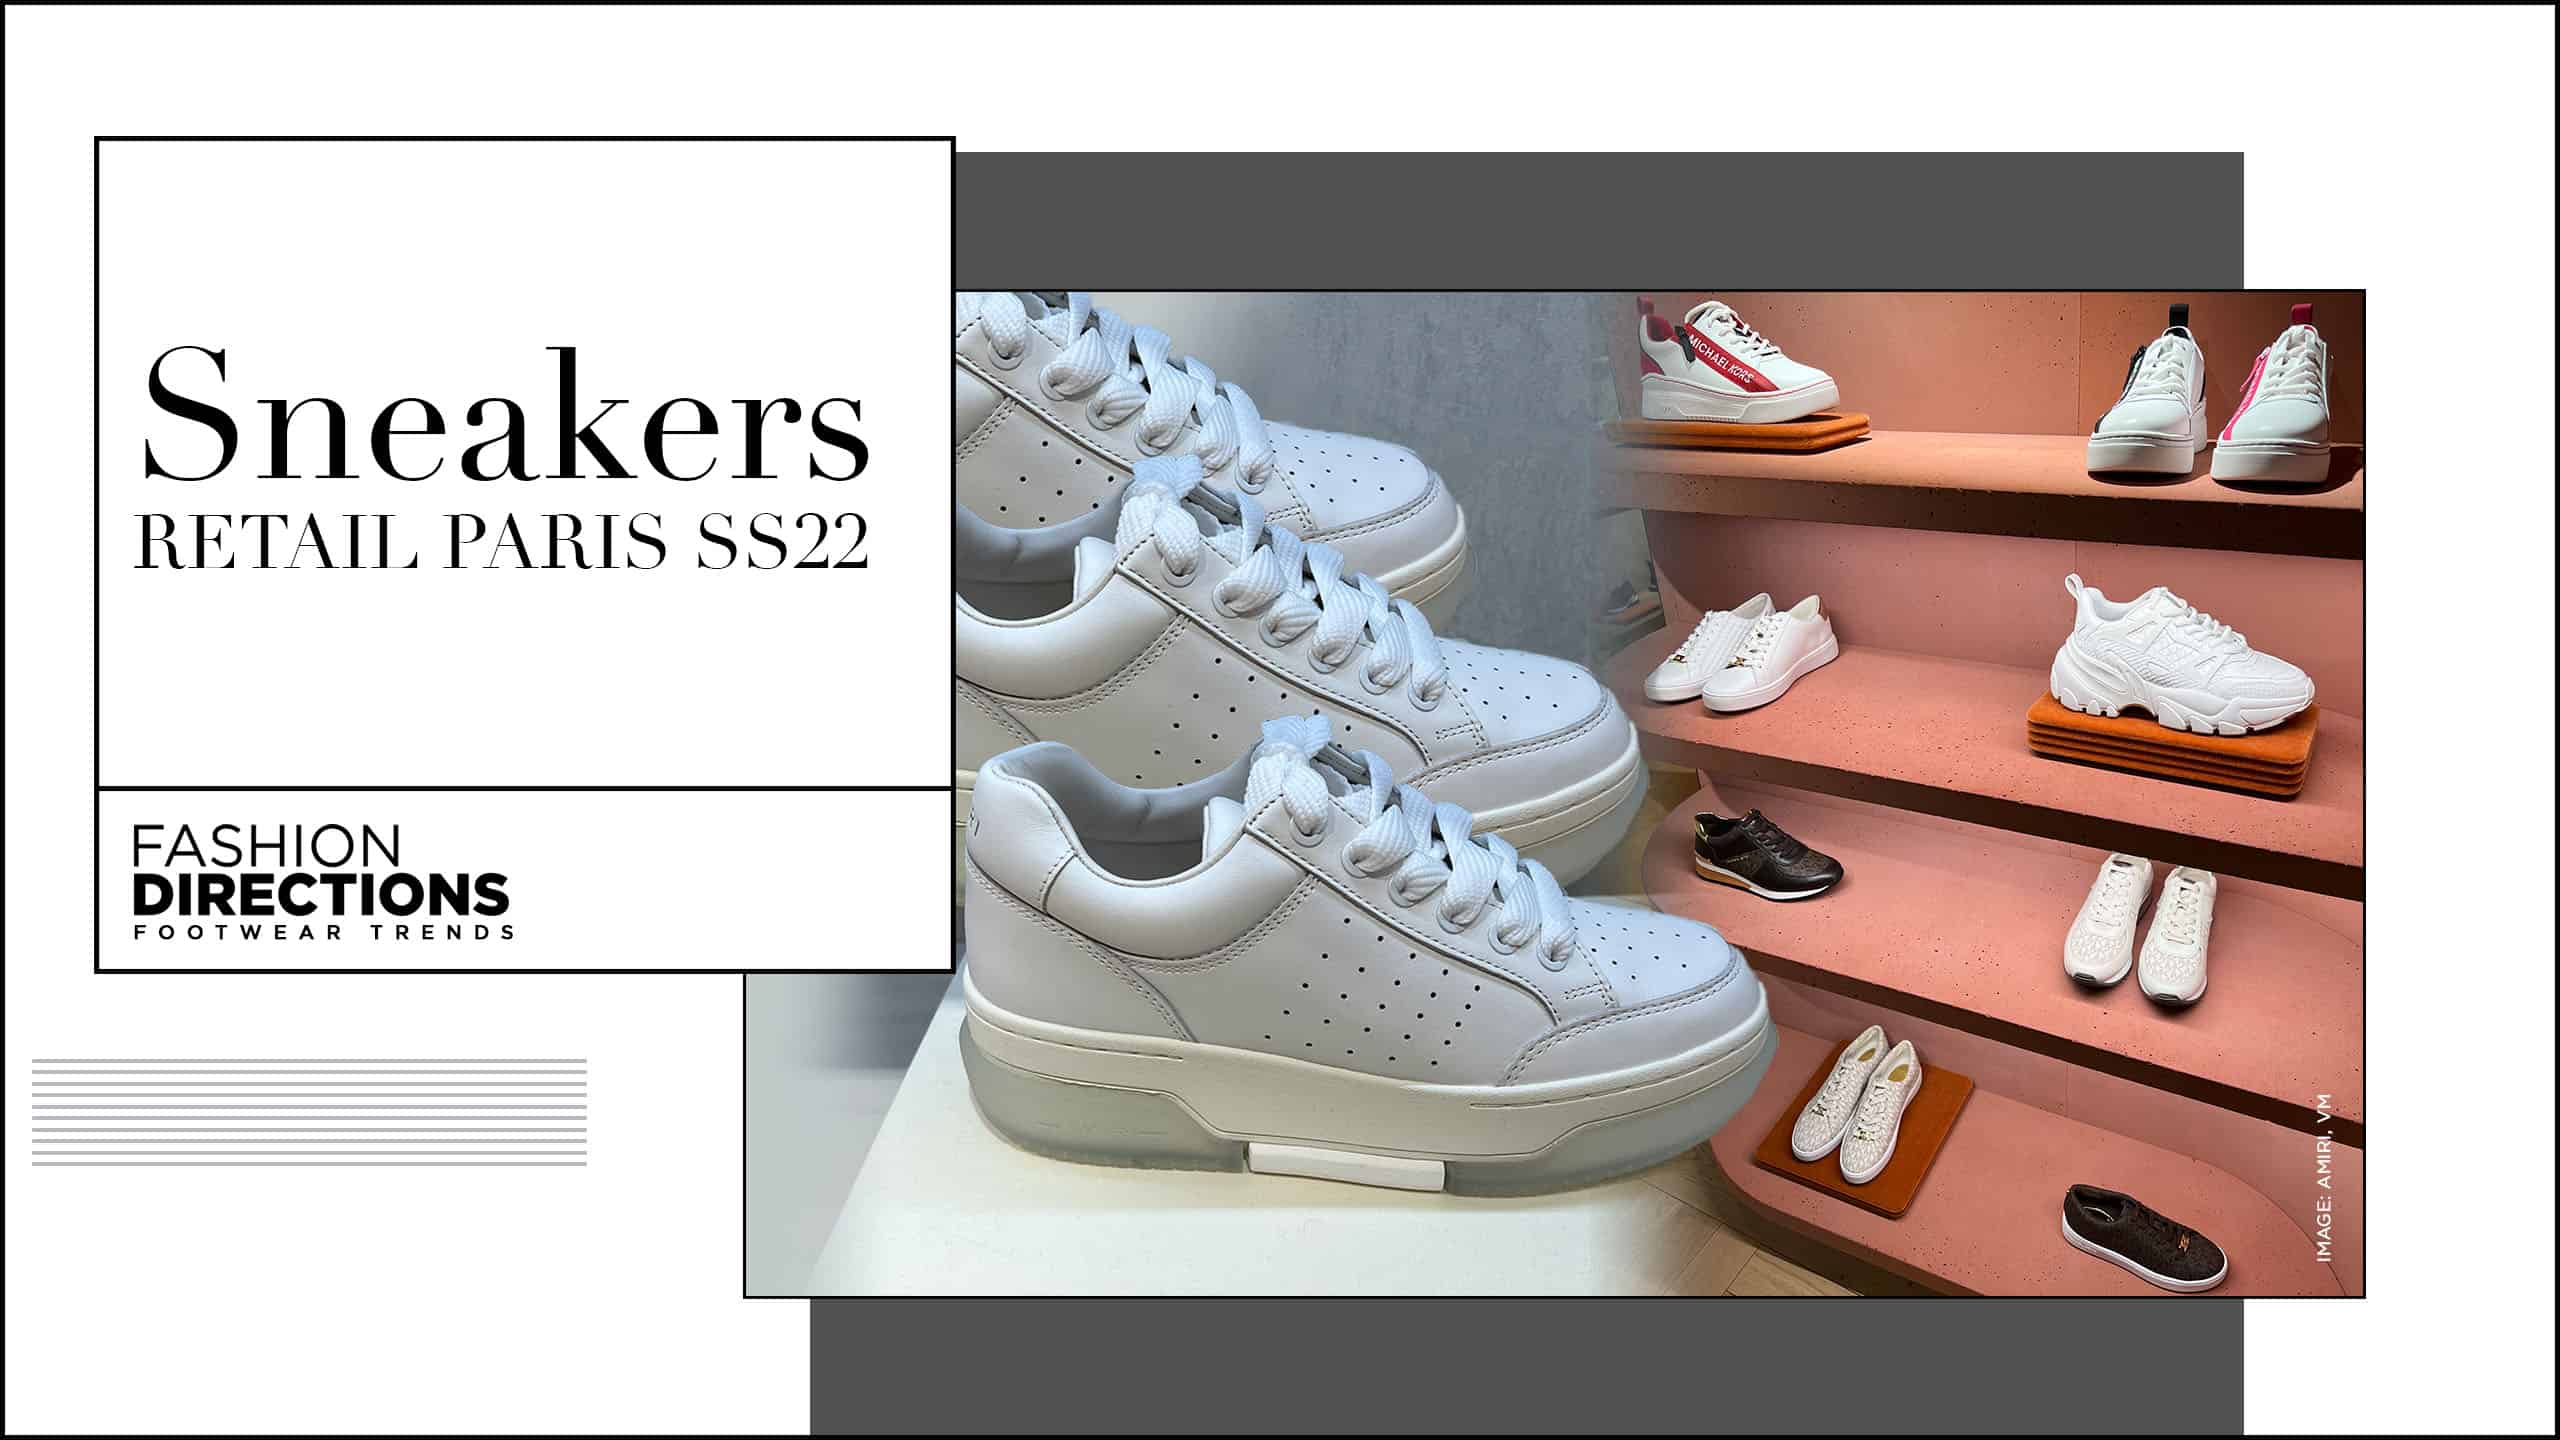 Retail sneakers Paris ss22